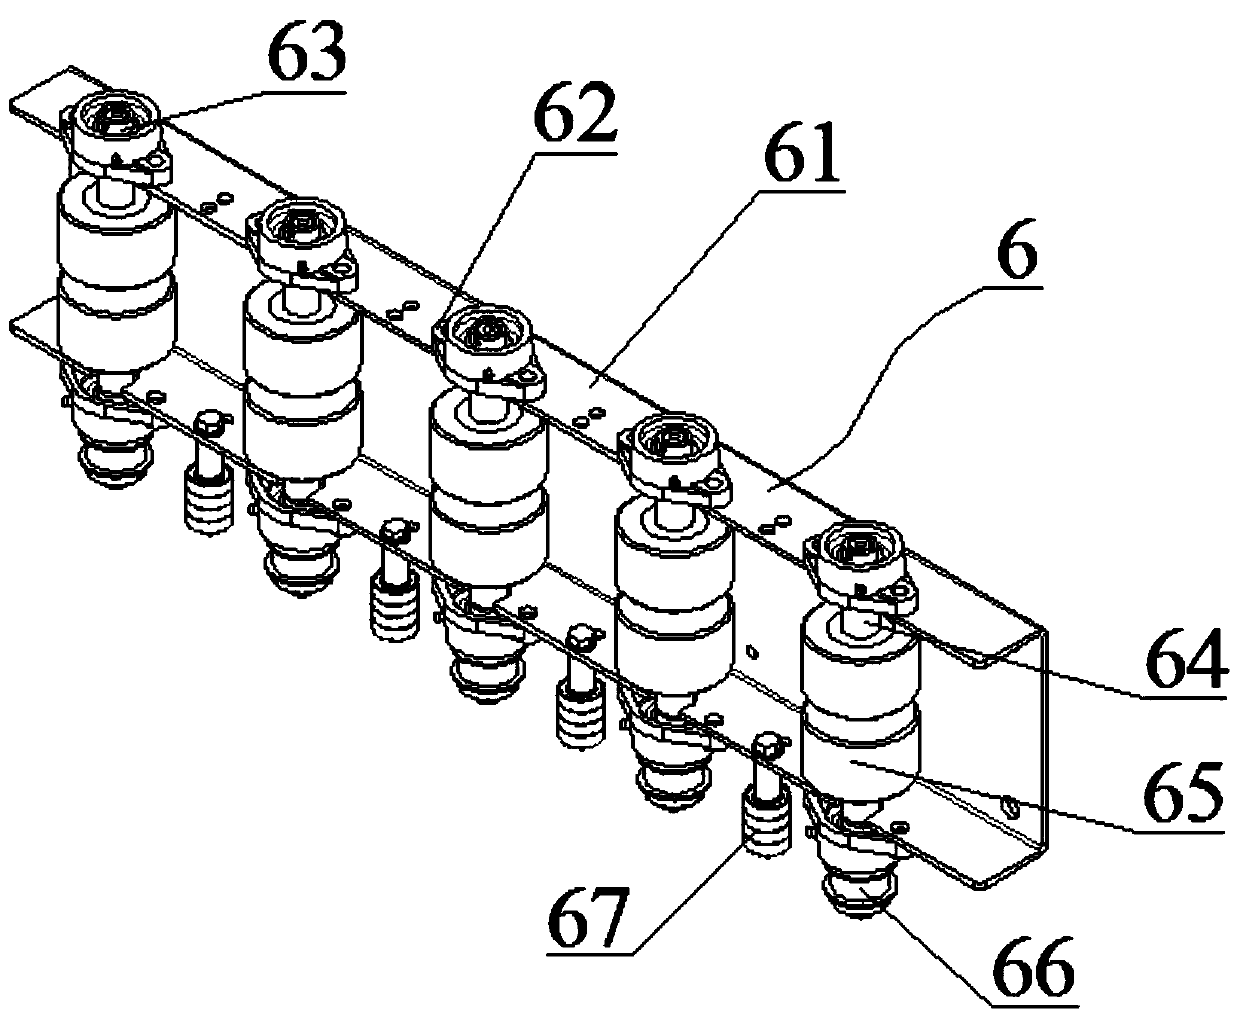 Single-unit row logistics bevel wheel sorting device